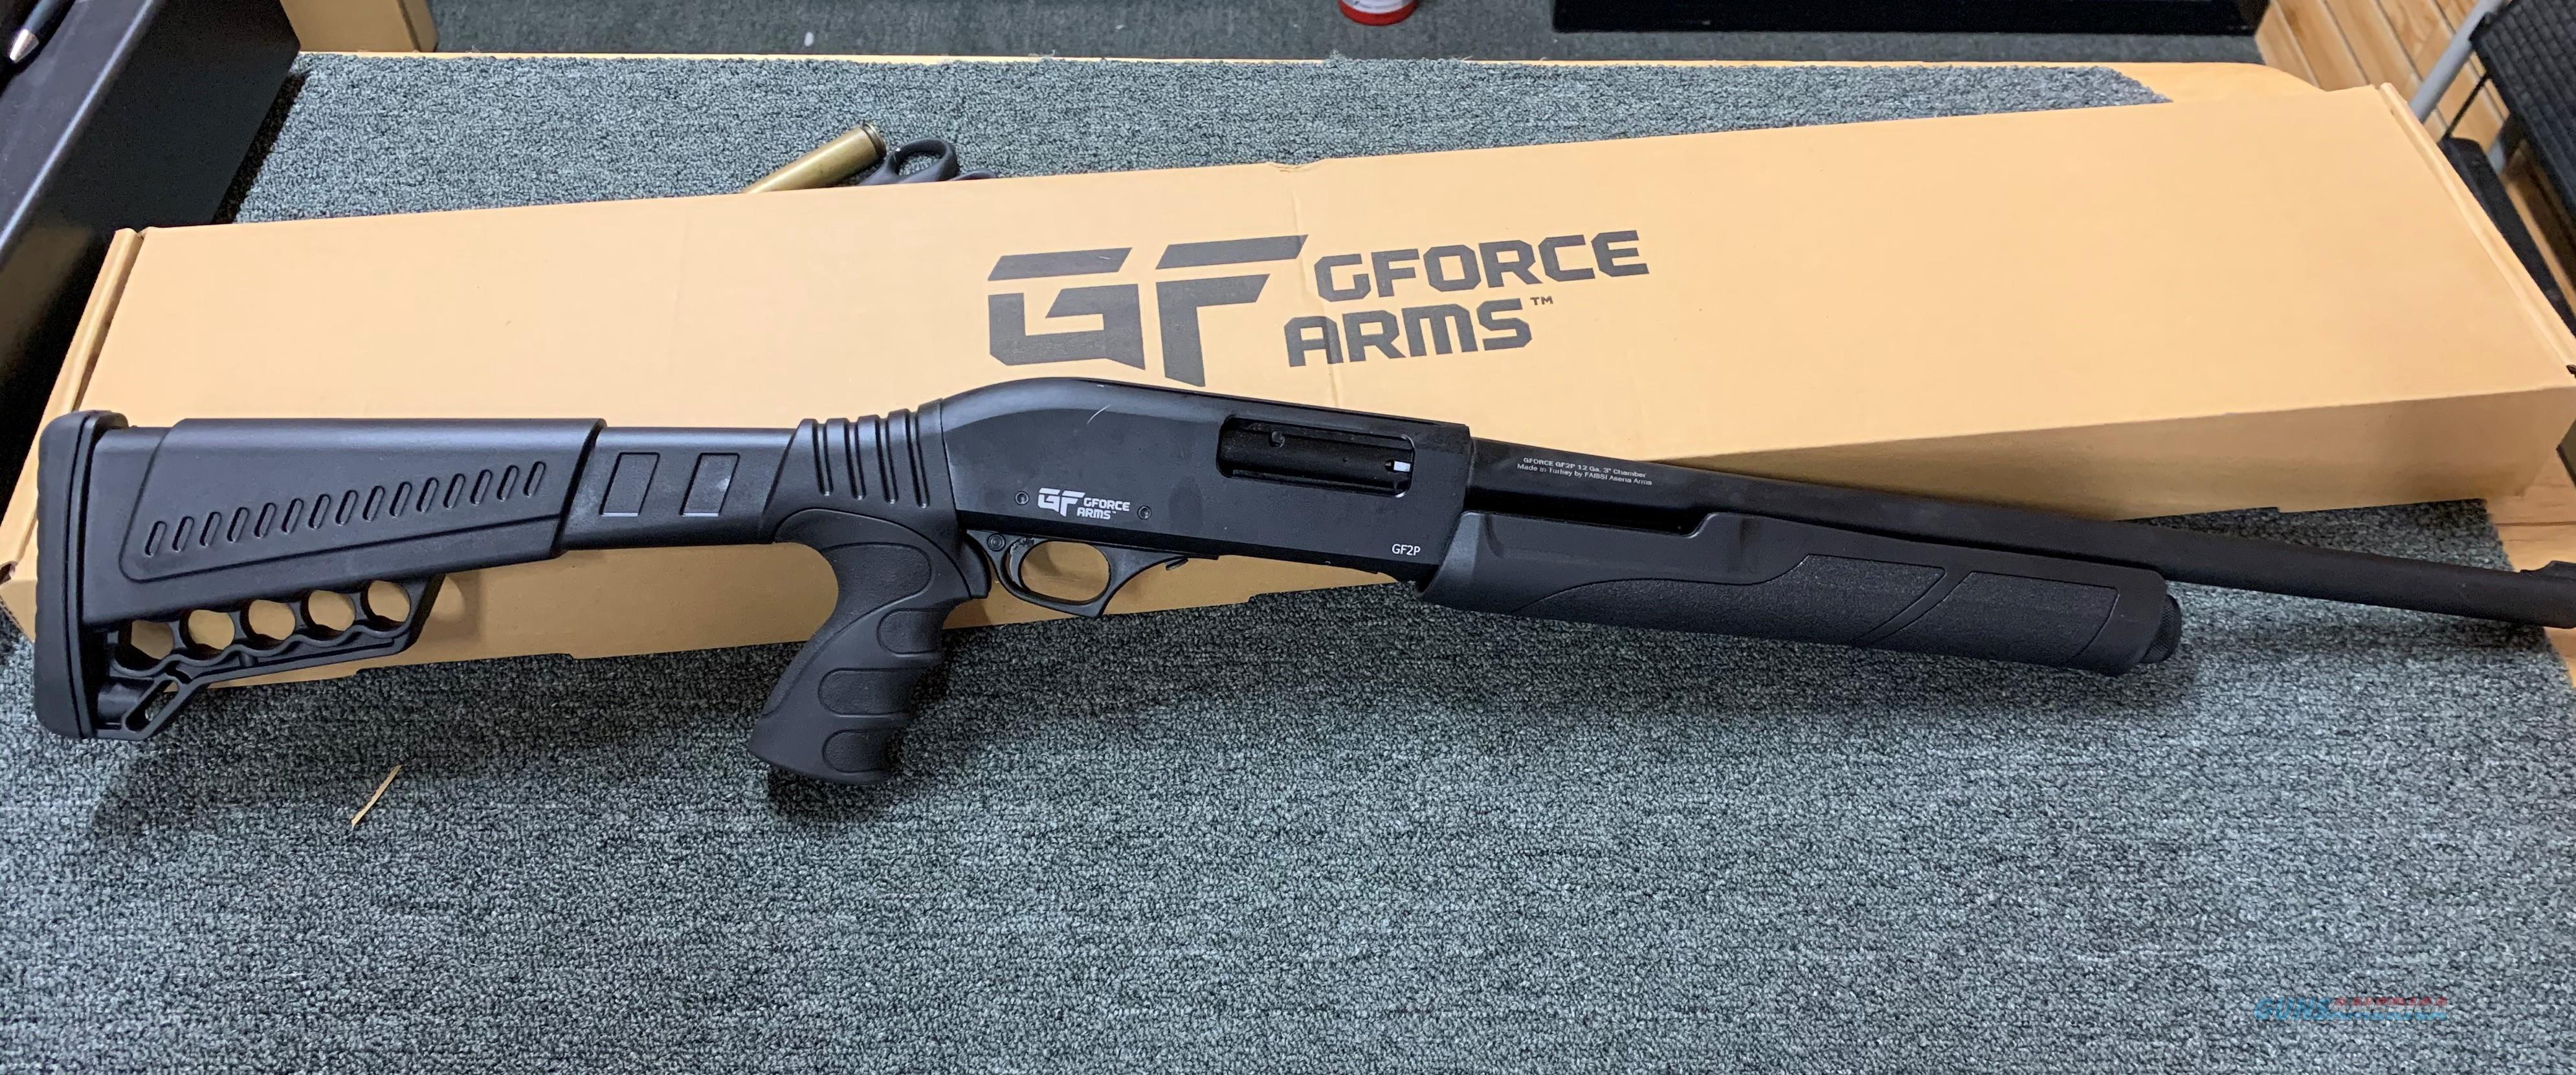 g force shotgun review